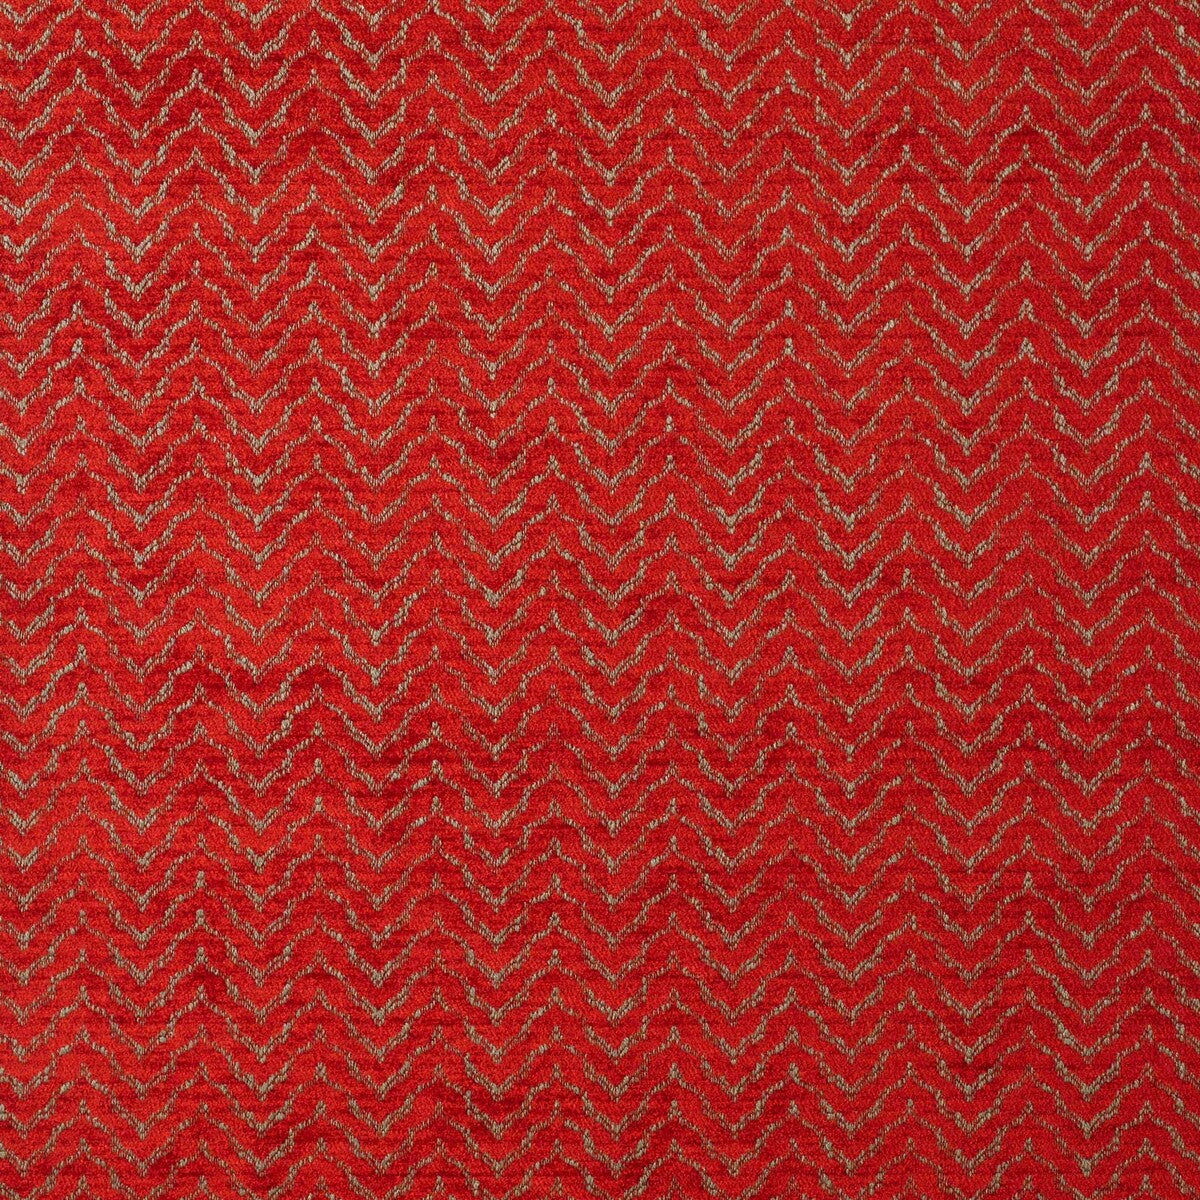 Sella fabric in rojo color - pattern GDT5180.009.0 - by Gaston y Daniela in the Lorenzo Castillo II collection